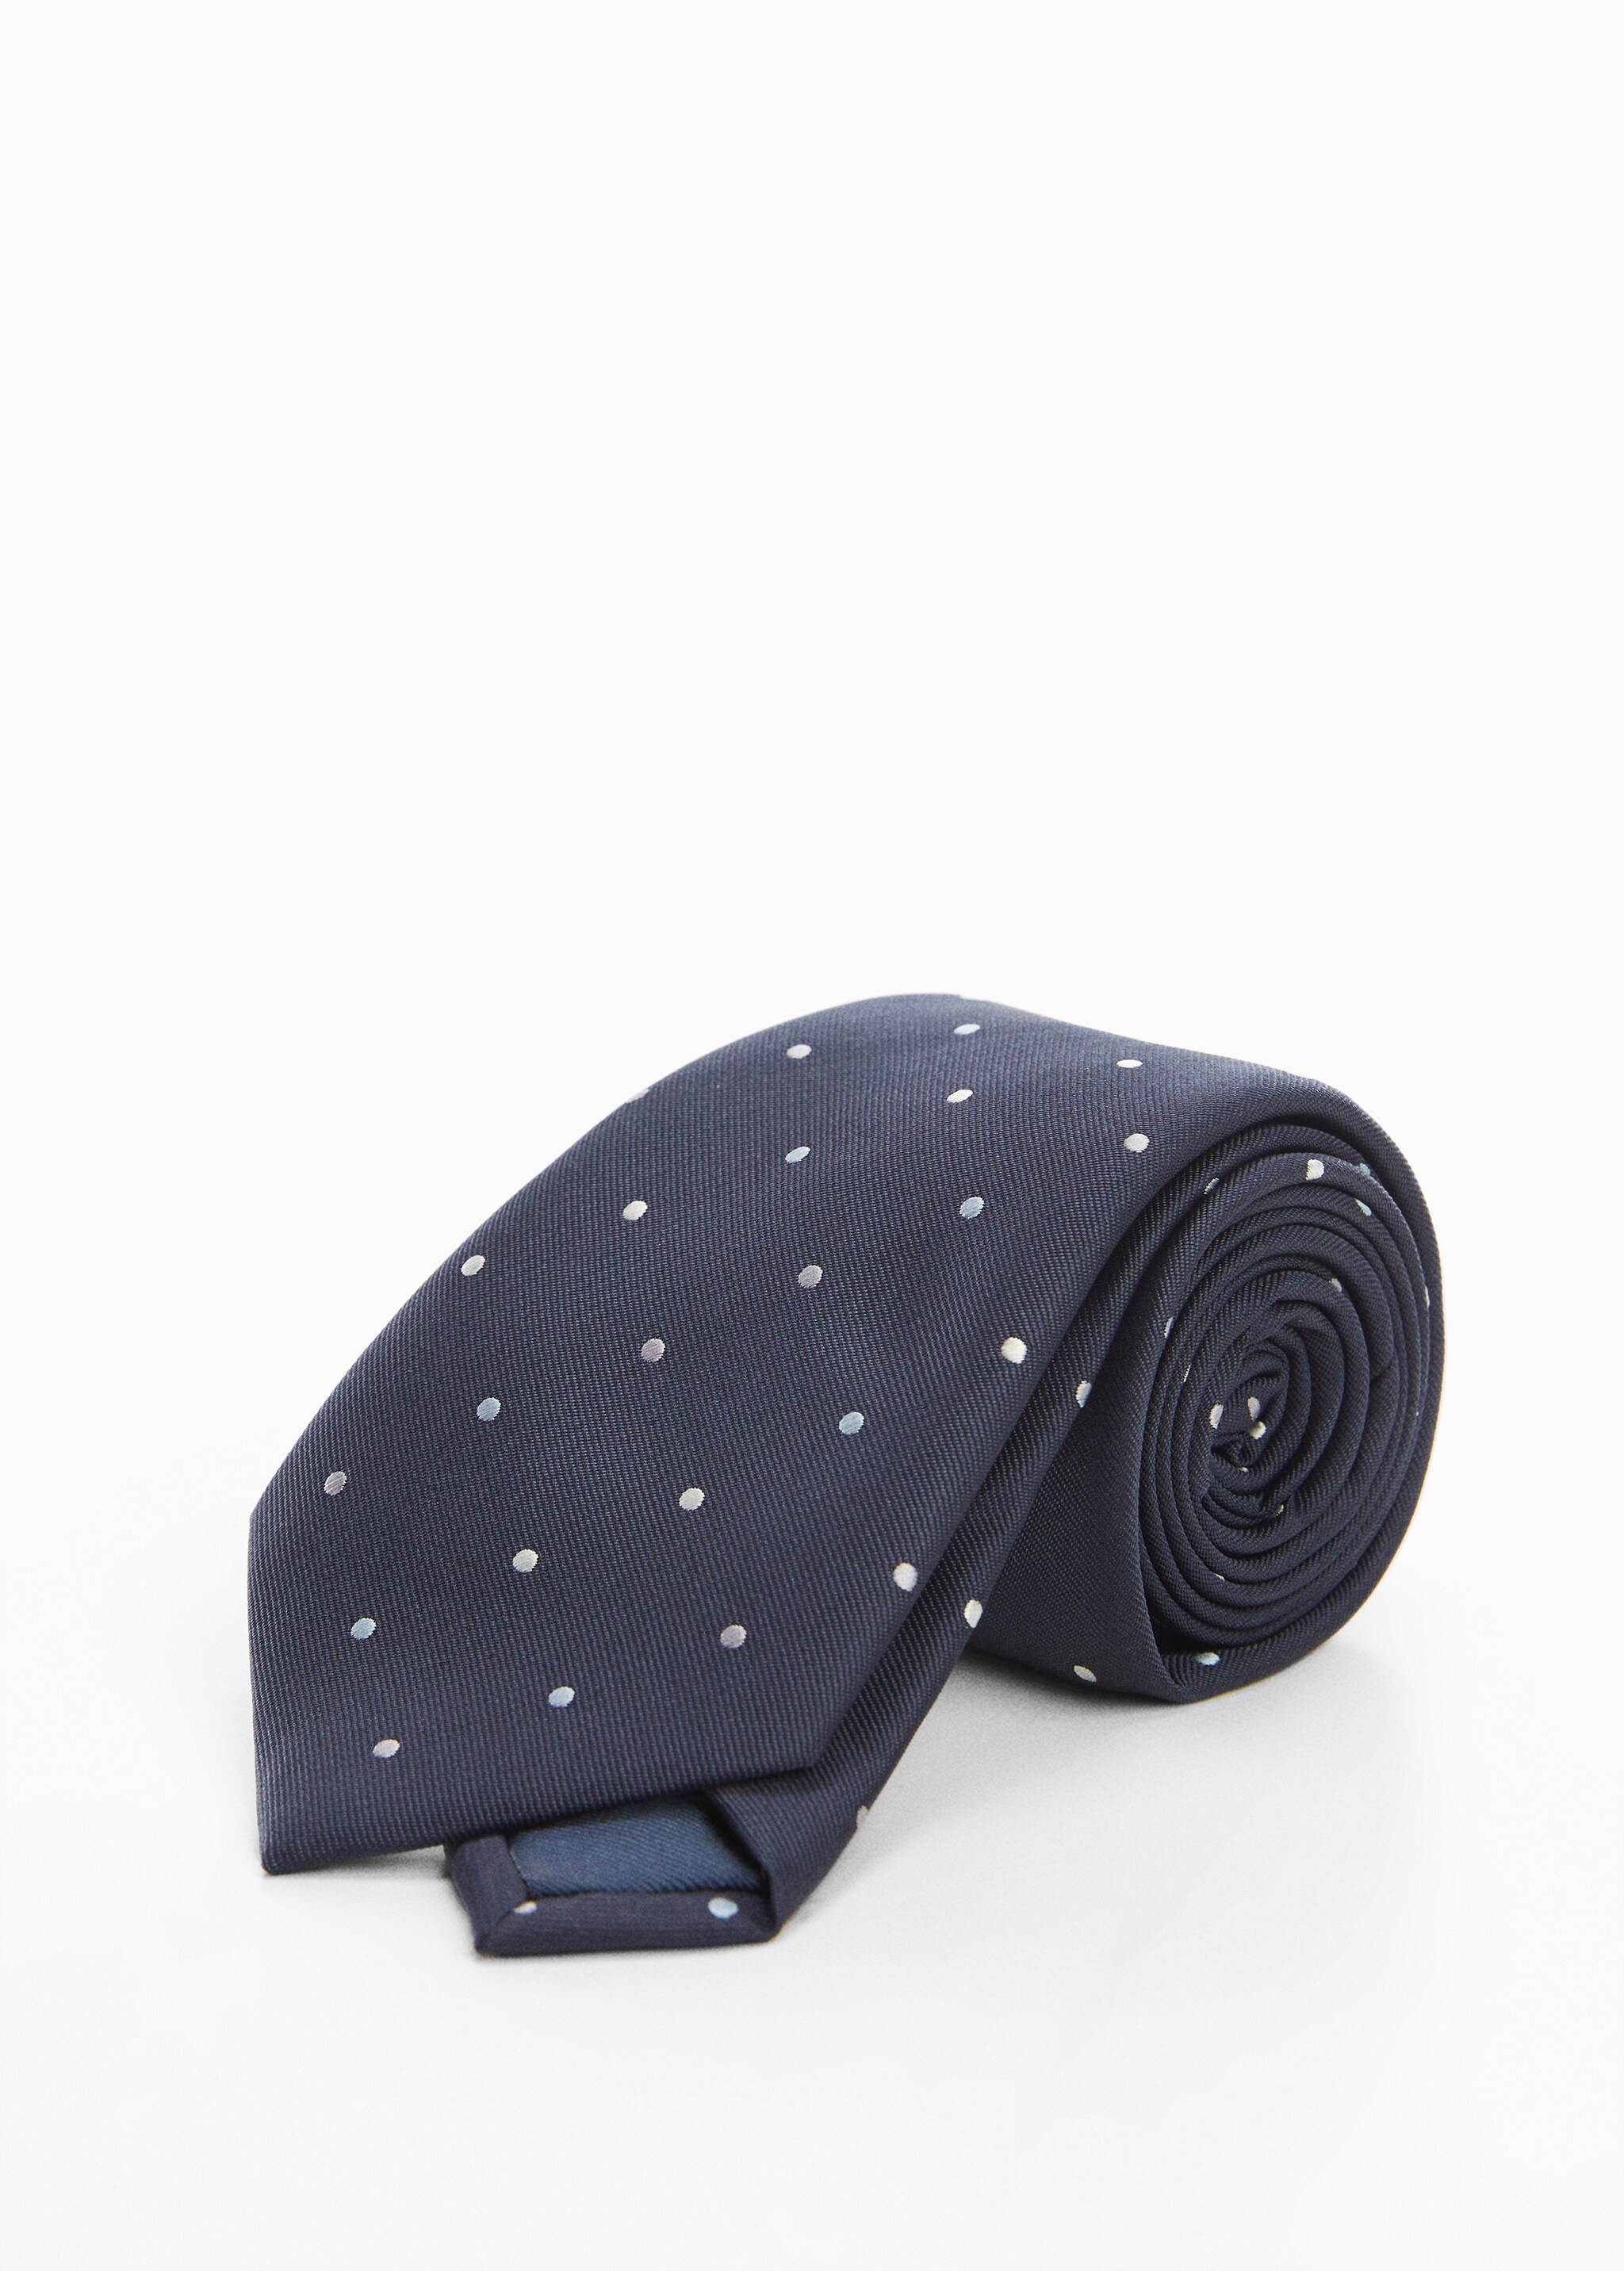 Polka-dot patterned tie - Medium plane